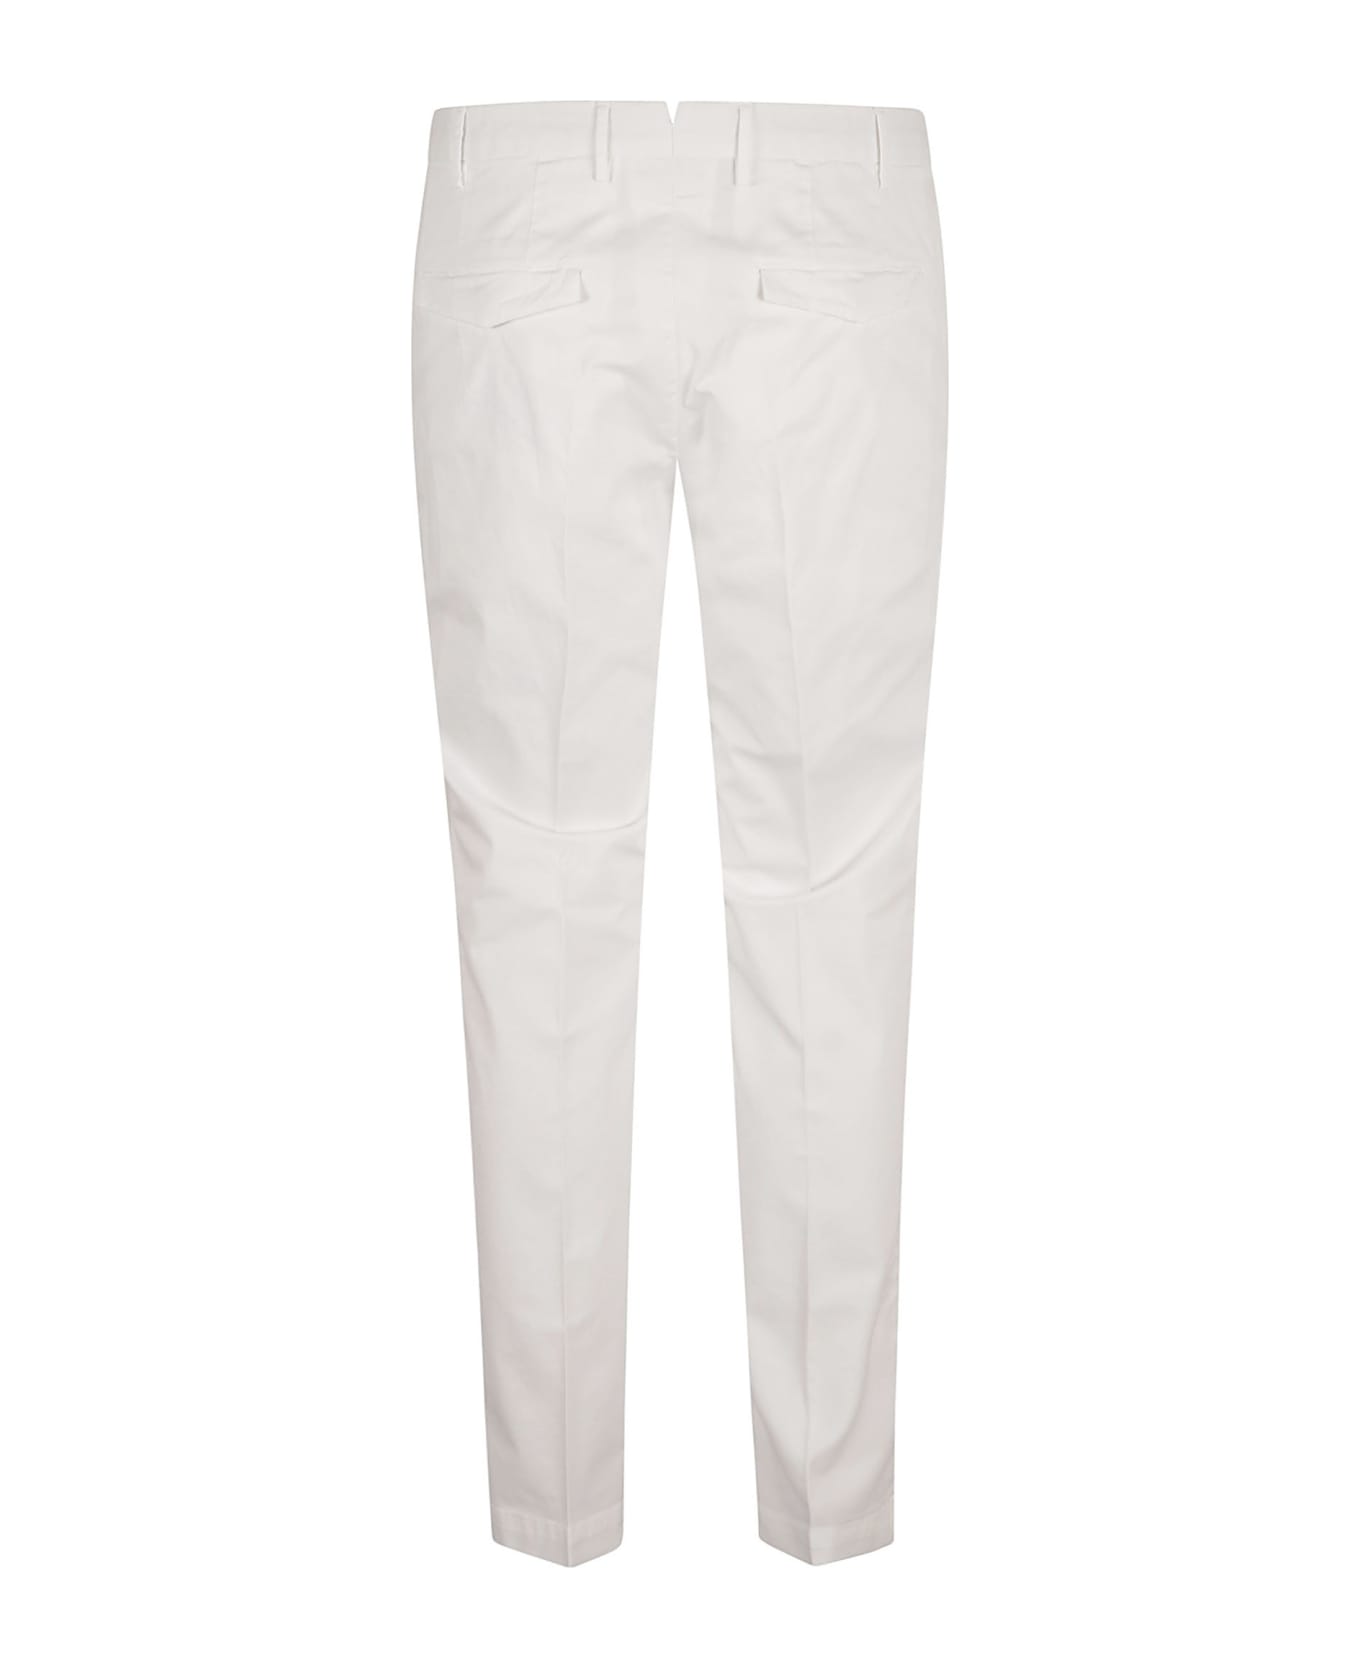 PT Torino Slim Fit Plain Trousers - White ボトムス